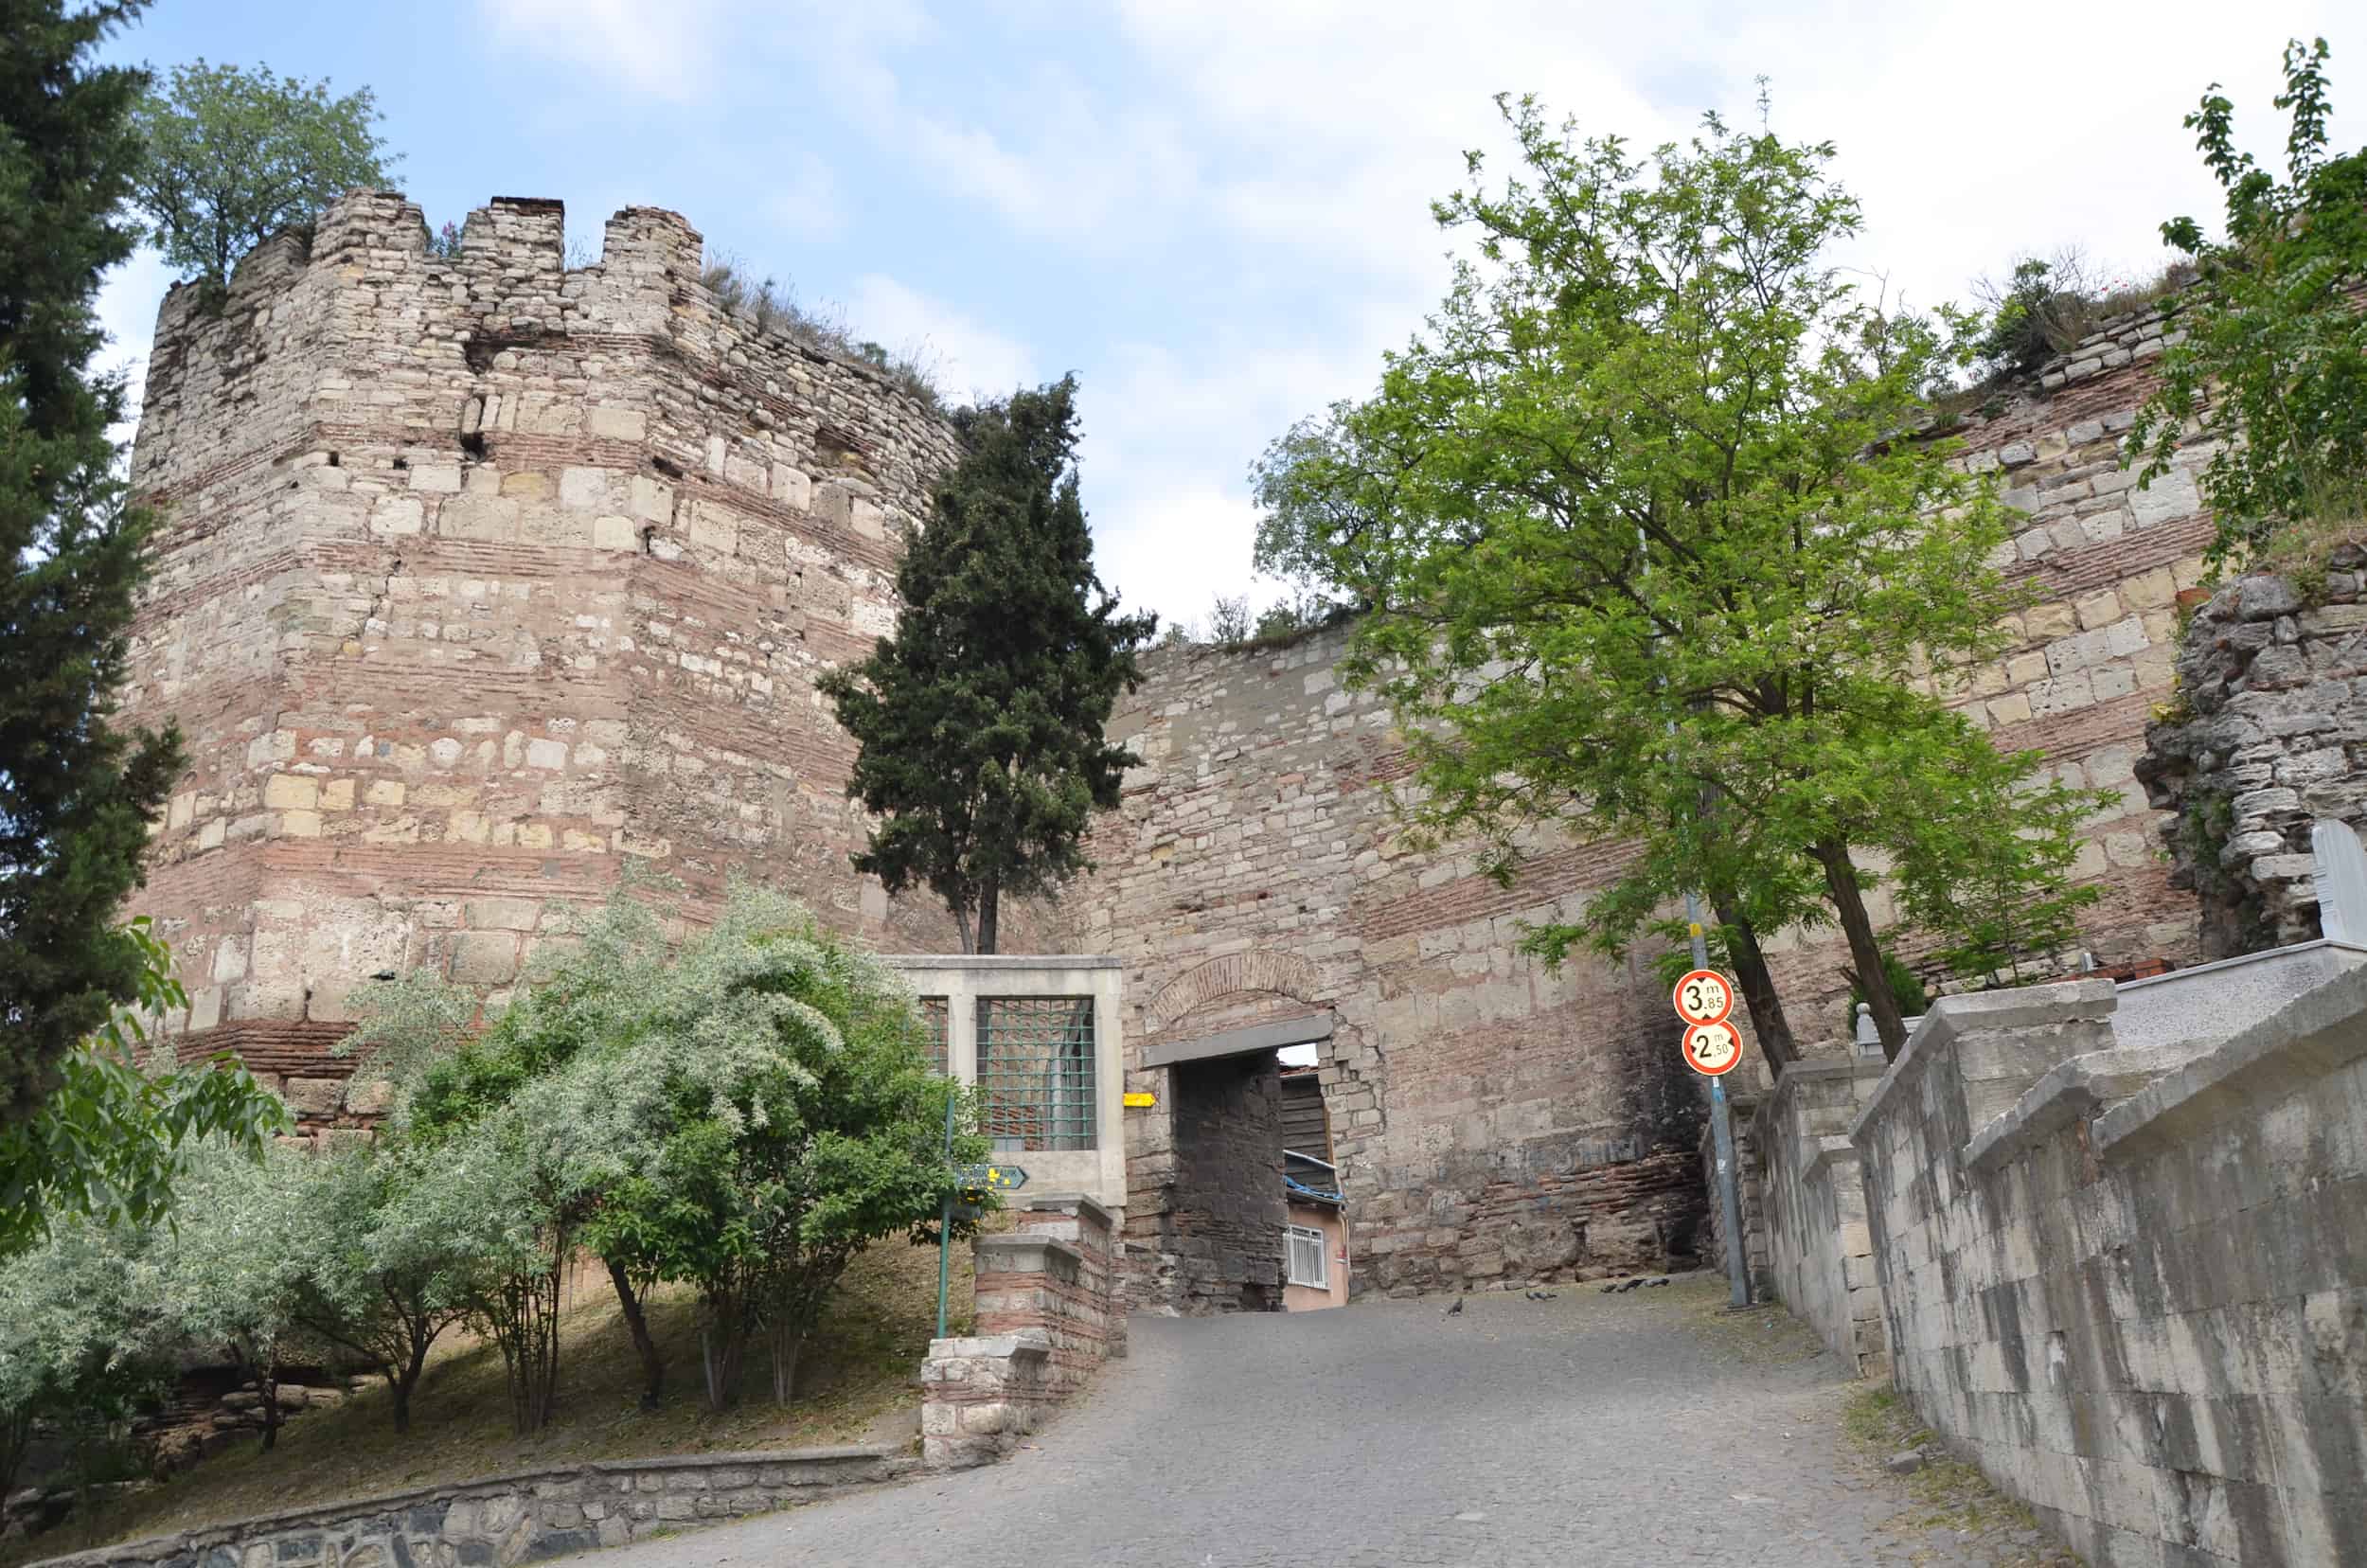 Gate of the Bootmakers' Quarter / Eğri Kapı on the Walls of Blachernae in Ayvansaray, Istanbul, Turkey